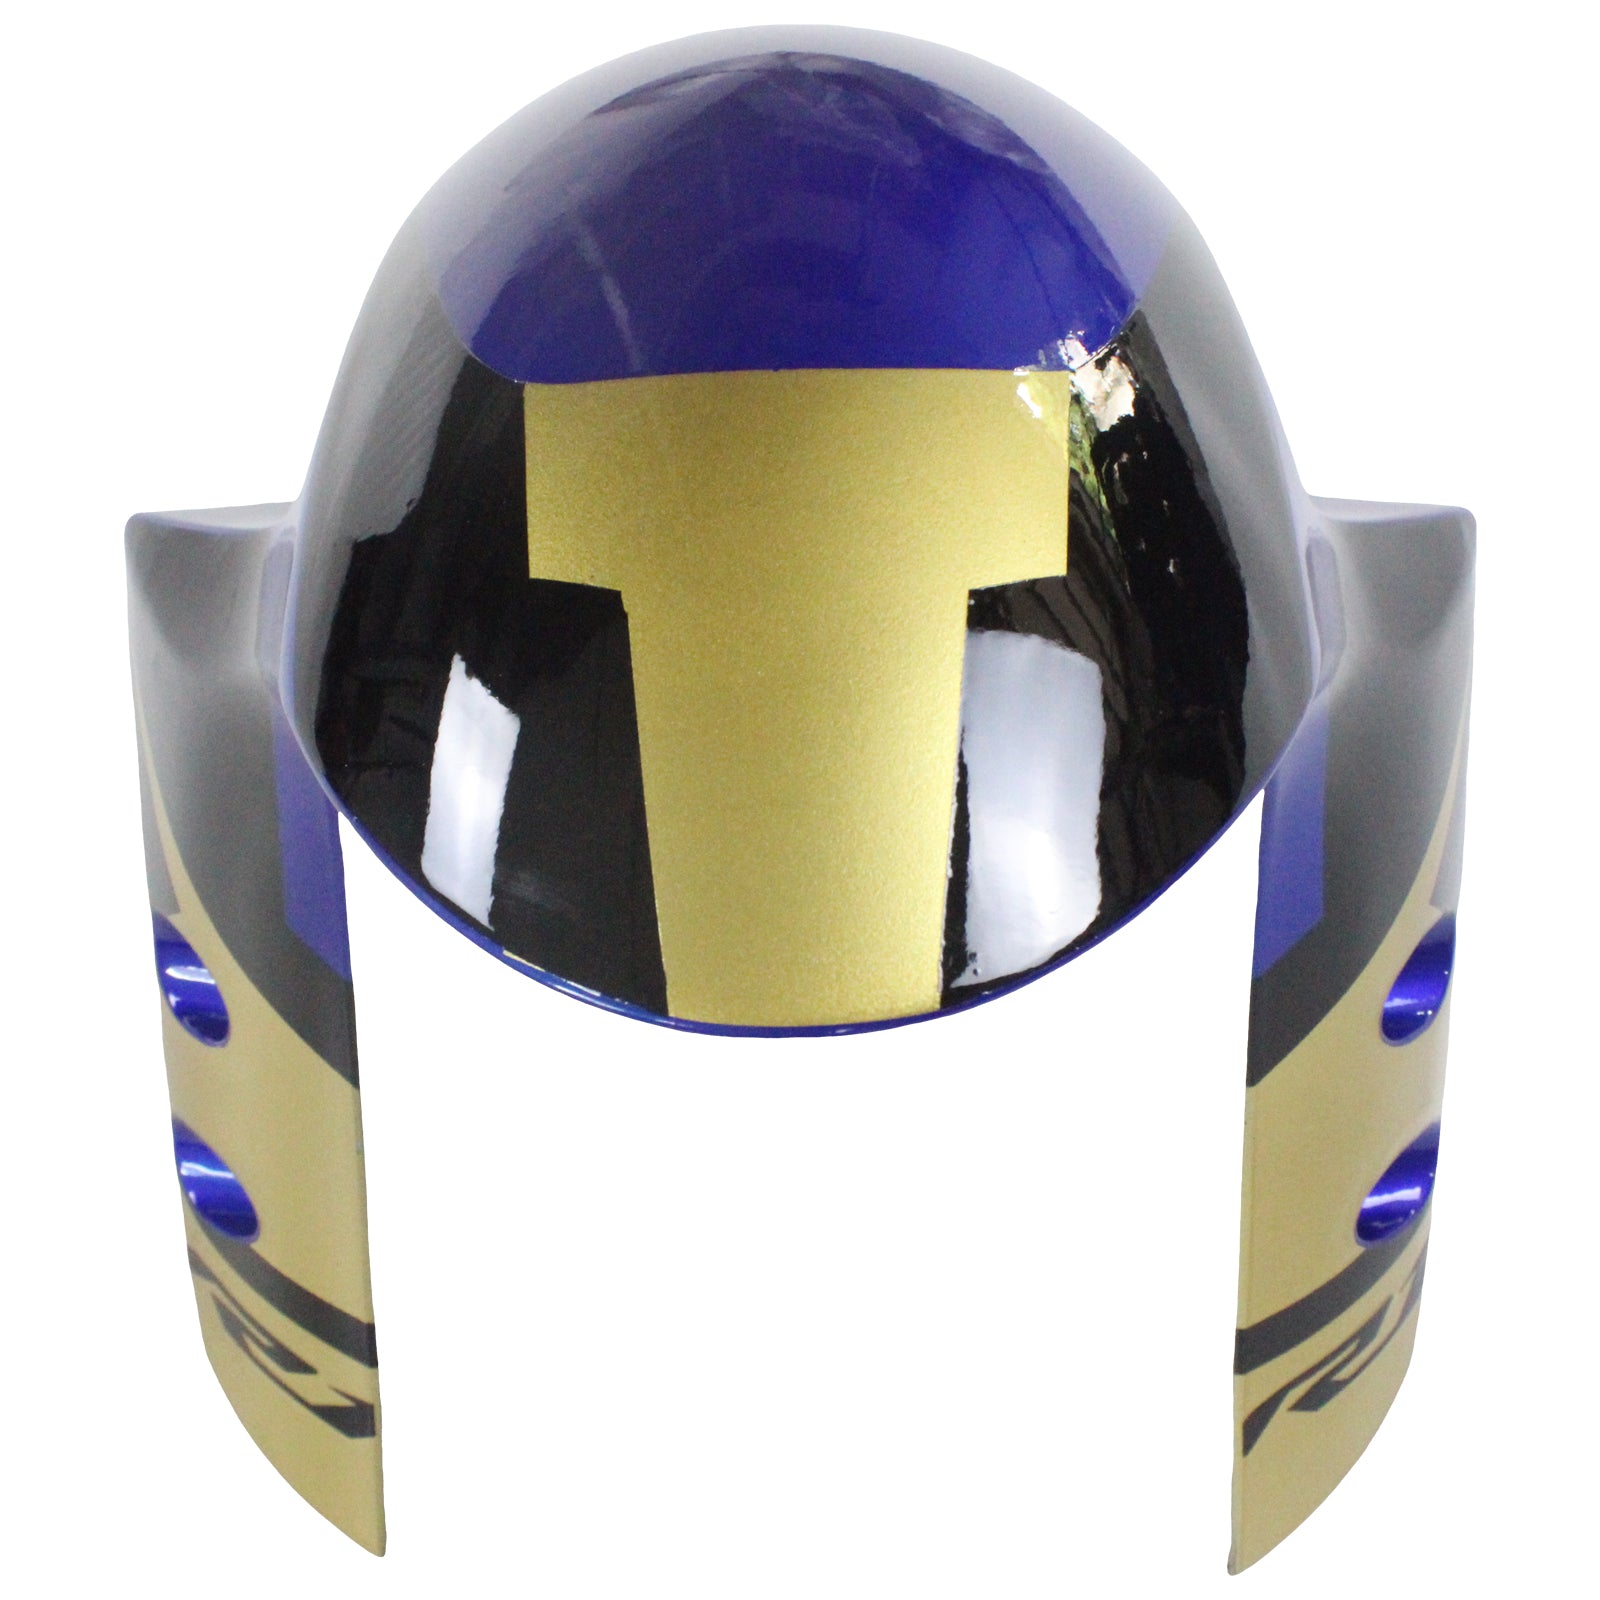 custom r1 yamaha helmet